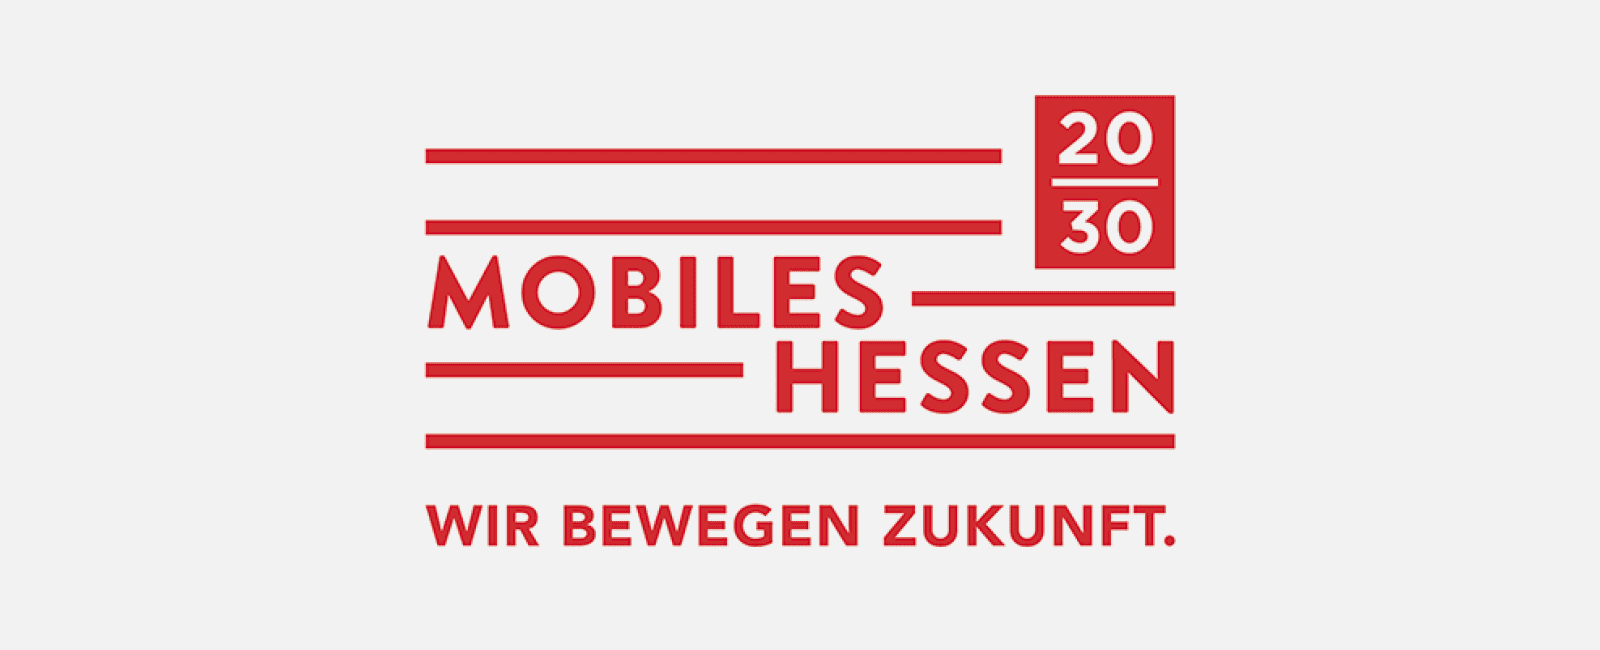 Mobiles Hessen 2030